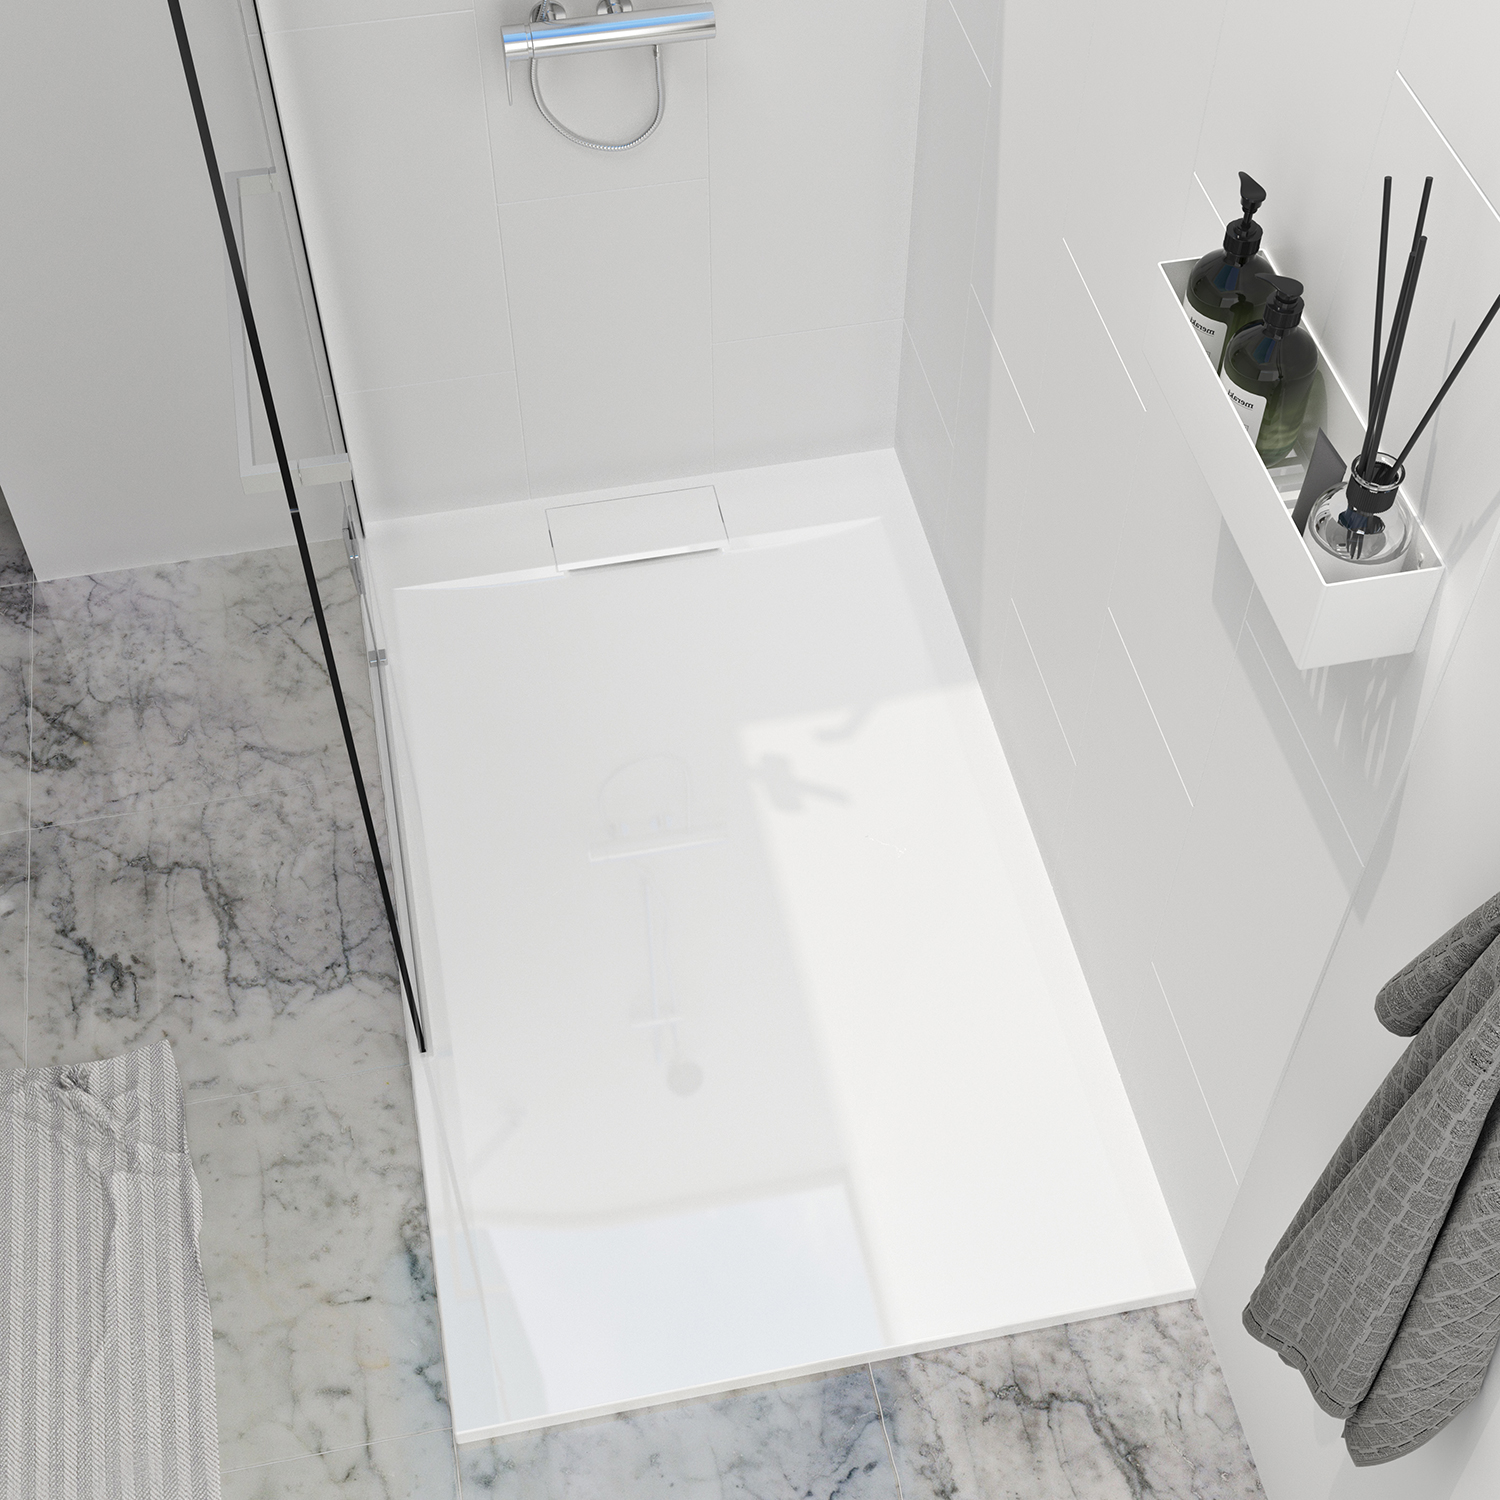 Shower base Liss 60 x 36, custom-made tile flange installation, in glossy white